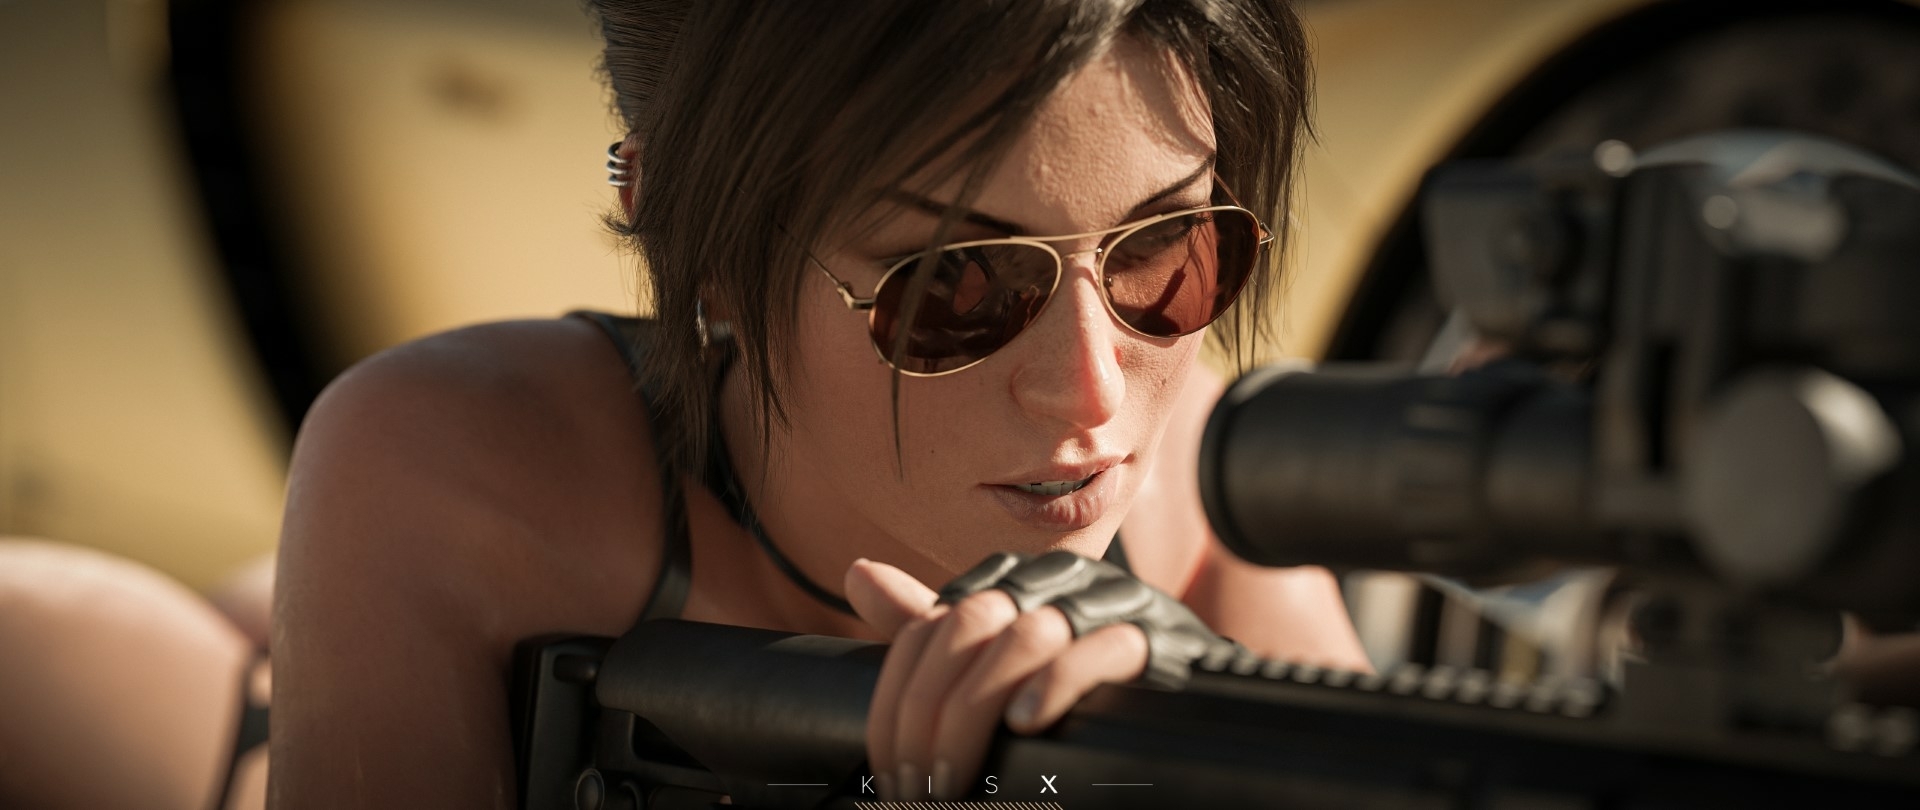 Lara appreciation time🍑 Lara Croft Tomb Raider Sexy Big Booty Pose Gun 3d Girl Outfit Pov Big Ass Sand Wet 6